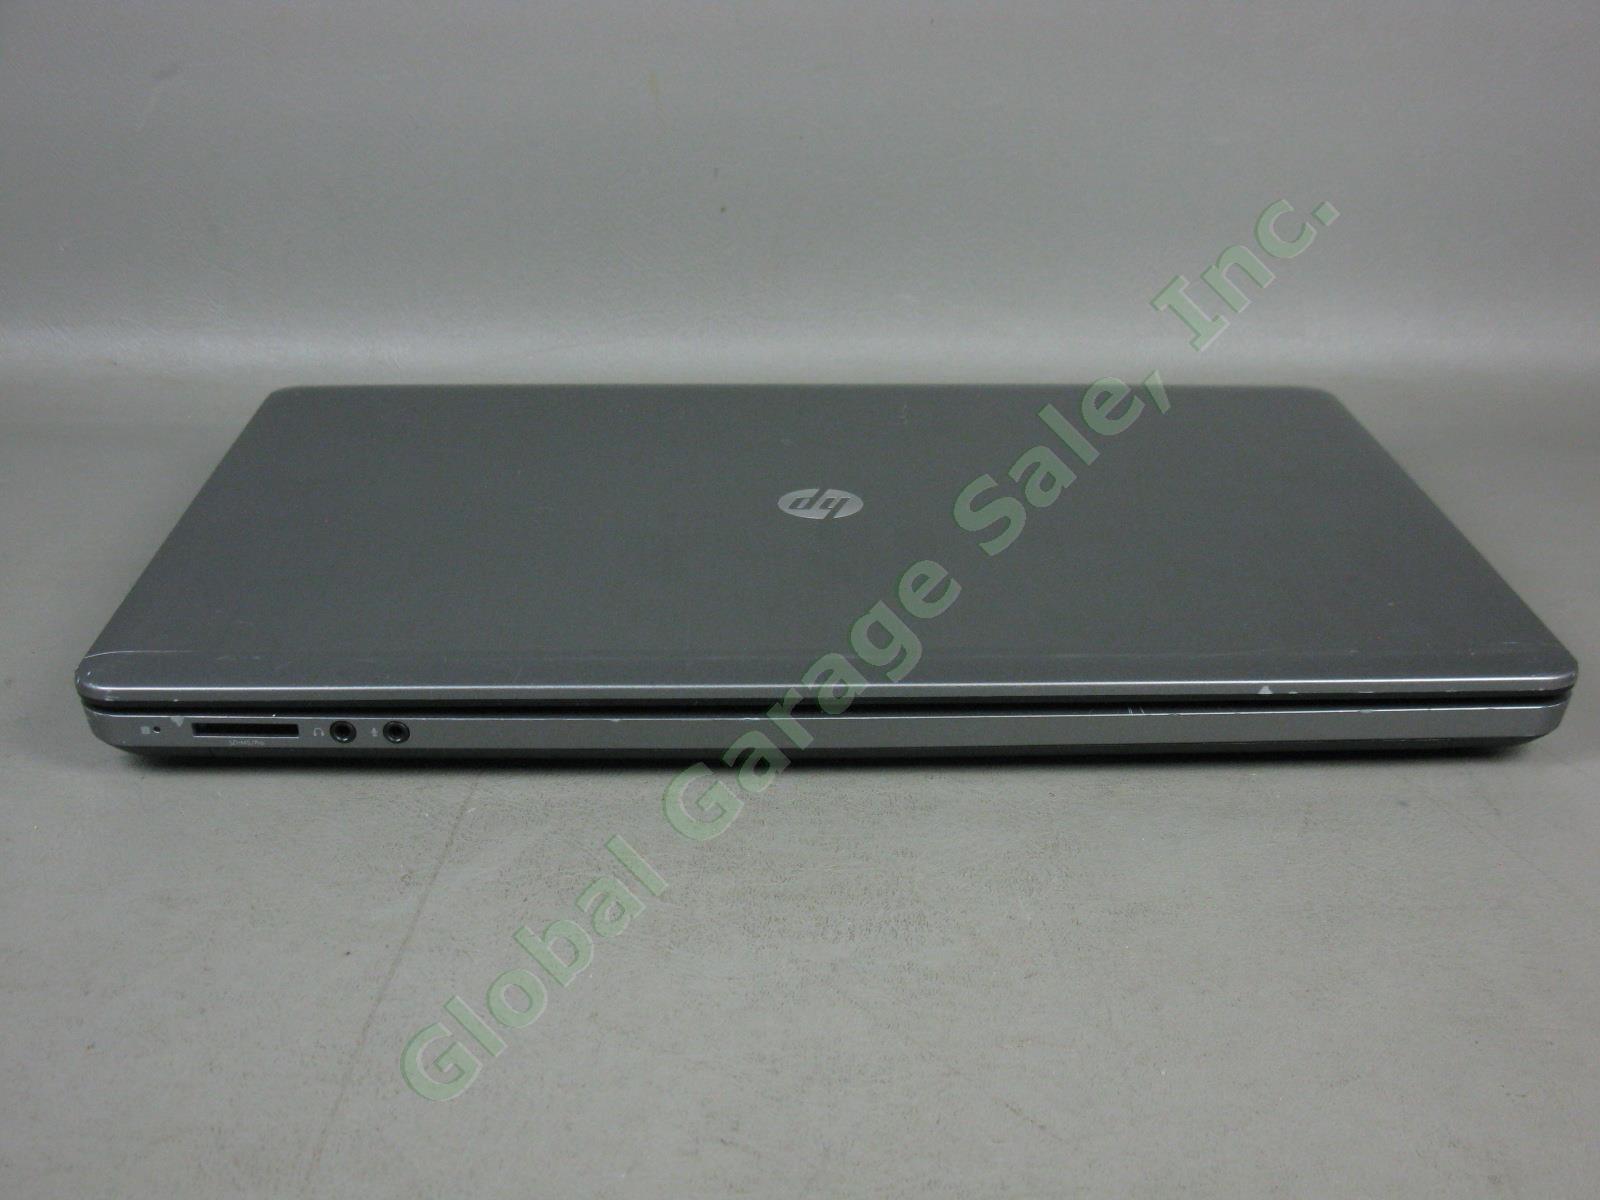 HP ProBook 4540s Laptop Intel i5 2.6GHz 300GB HDD 4GB RAM Win 10 Pro See Descr 4